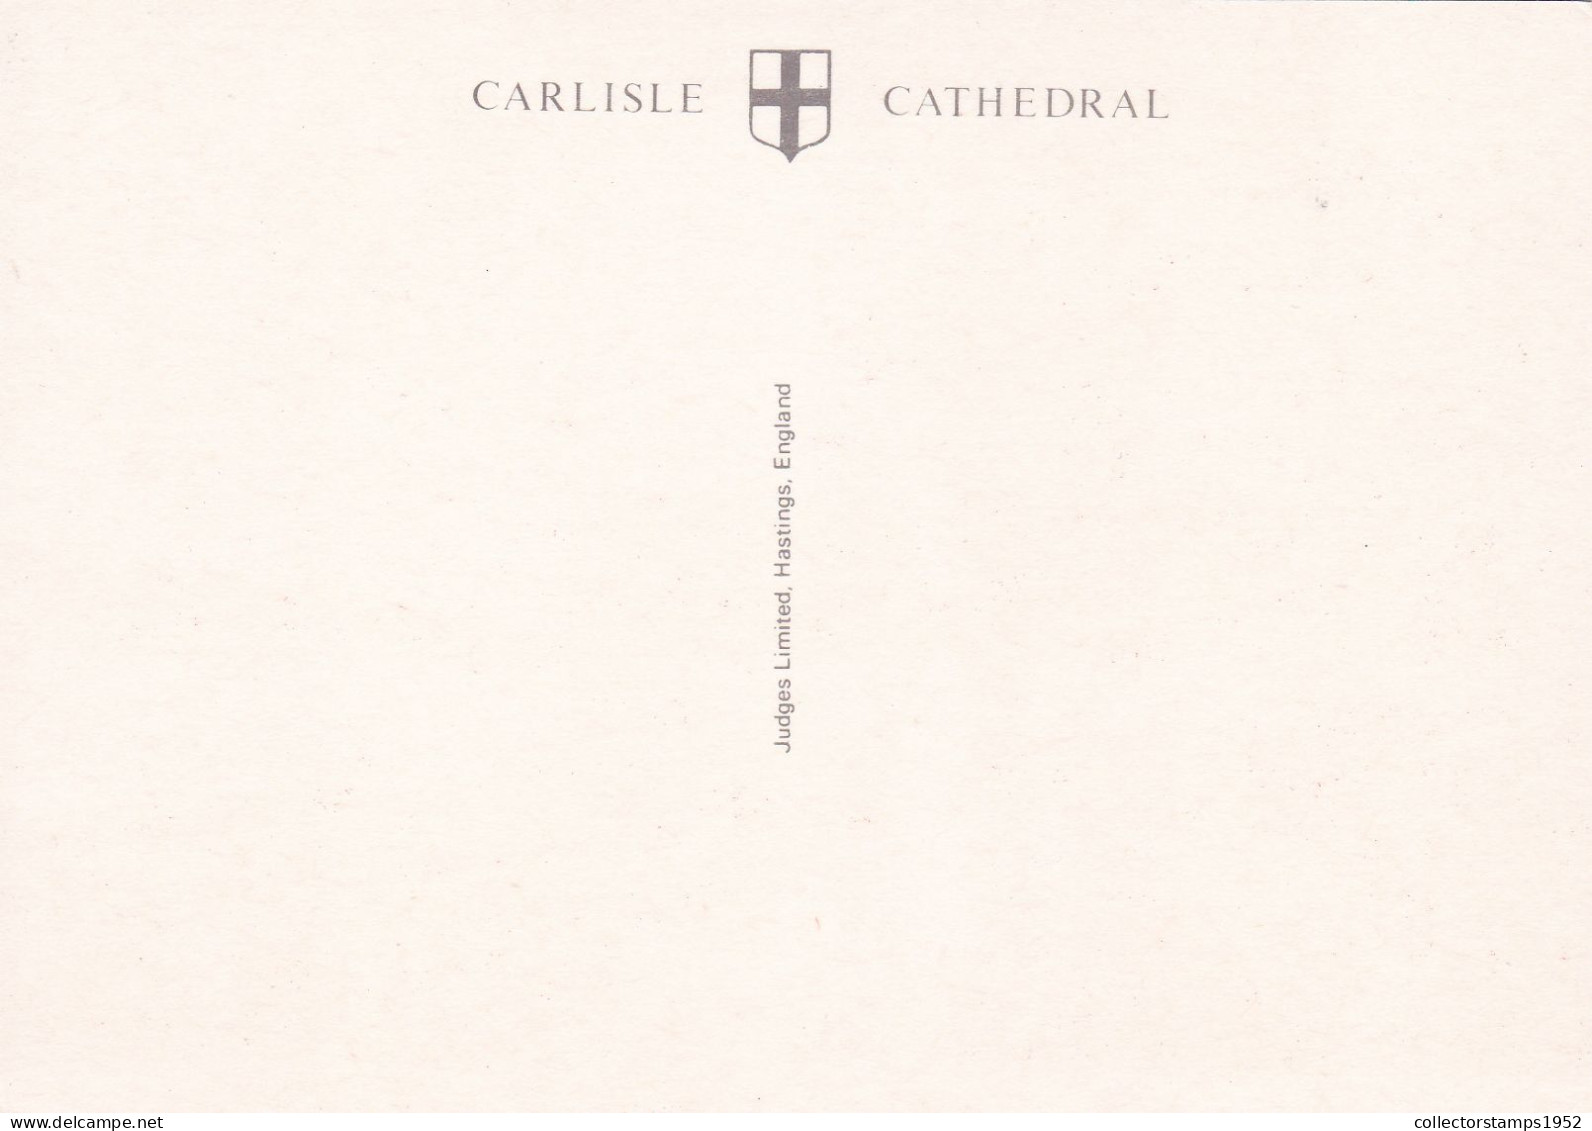 CARLISE CATHEDRAL, THE CHOIR, CUMBRIA, CHURCH, UNITED KINGDOM - Carlisle